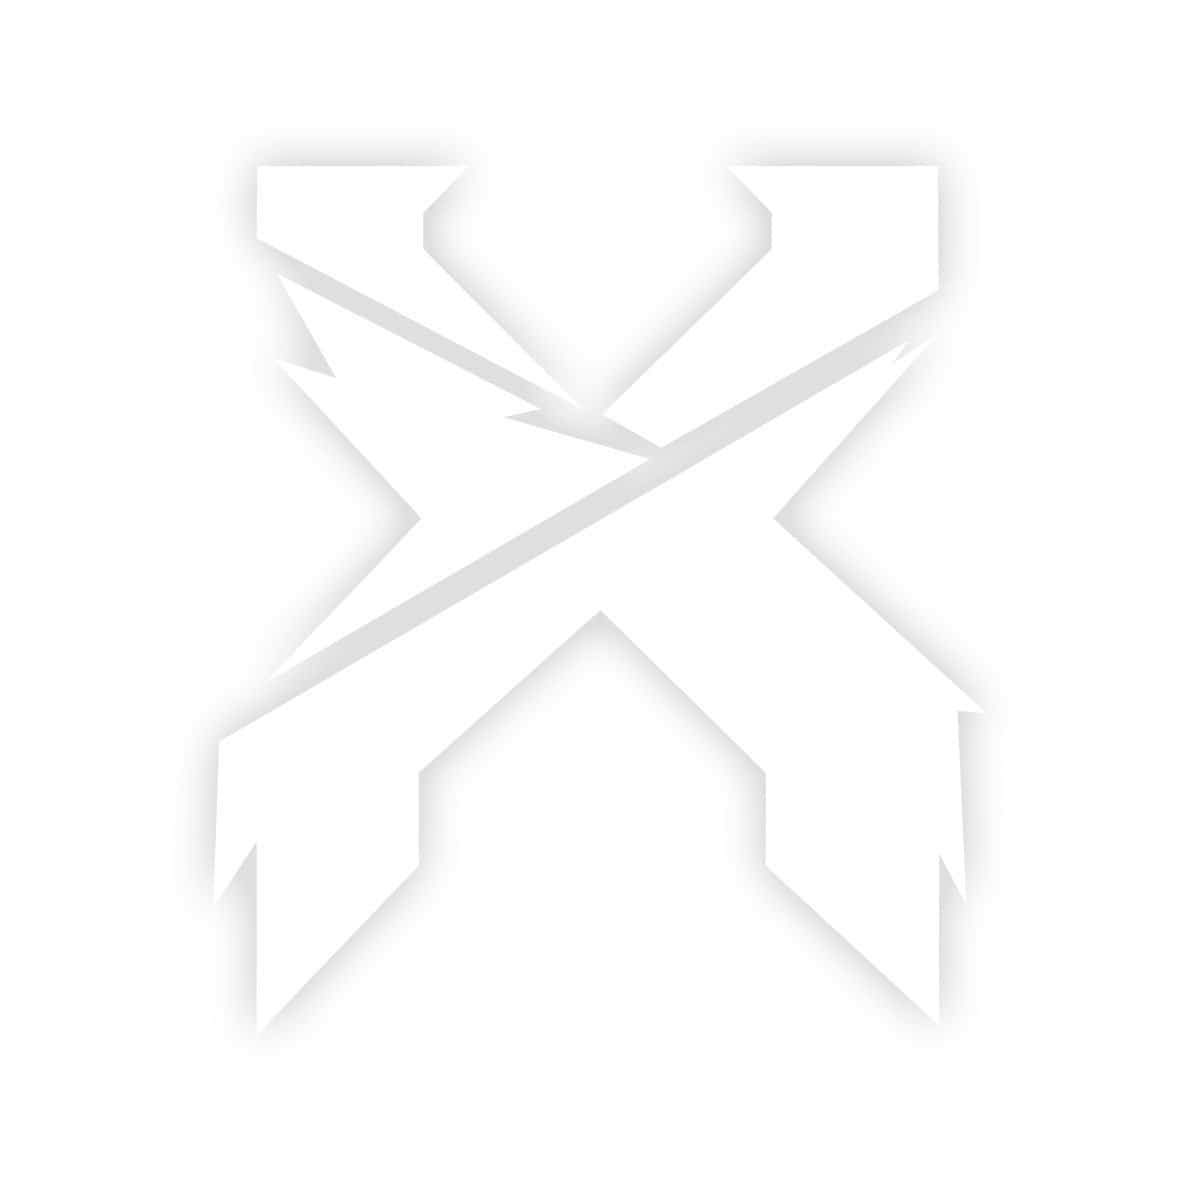 Excision Logo - Excision 'Sliced' Symbol Vinyl Decal